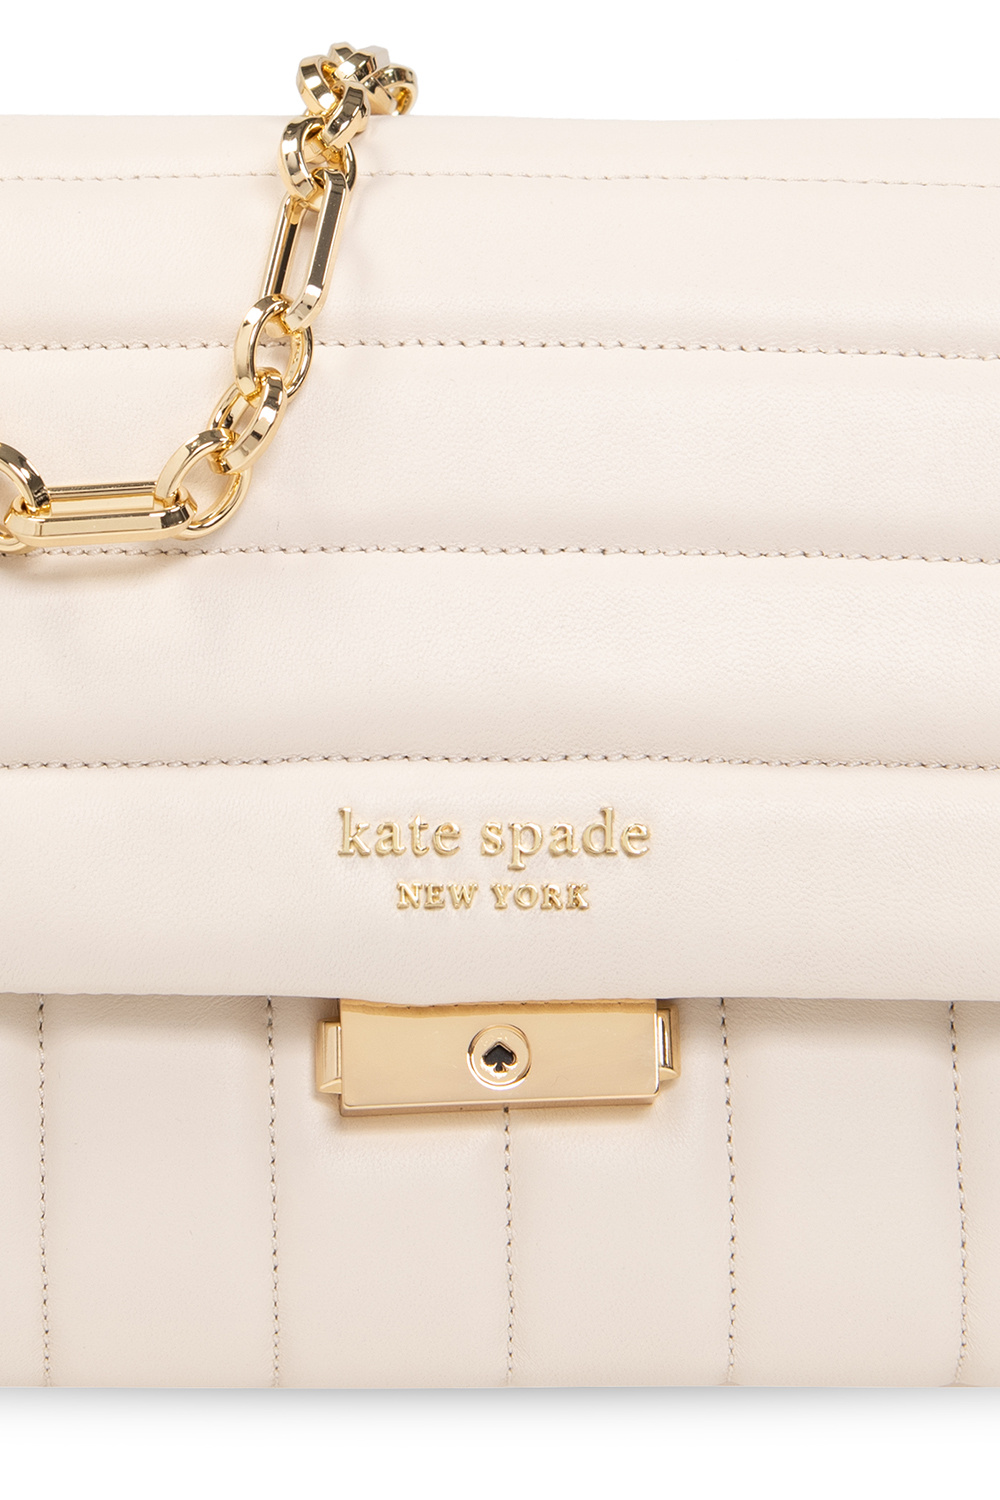 Kate Spade Handbag Small Black Shoulder Bag With Gold Chain 